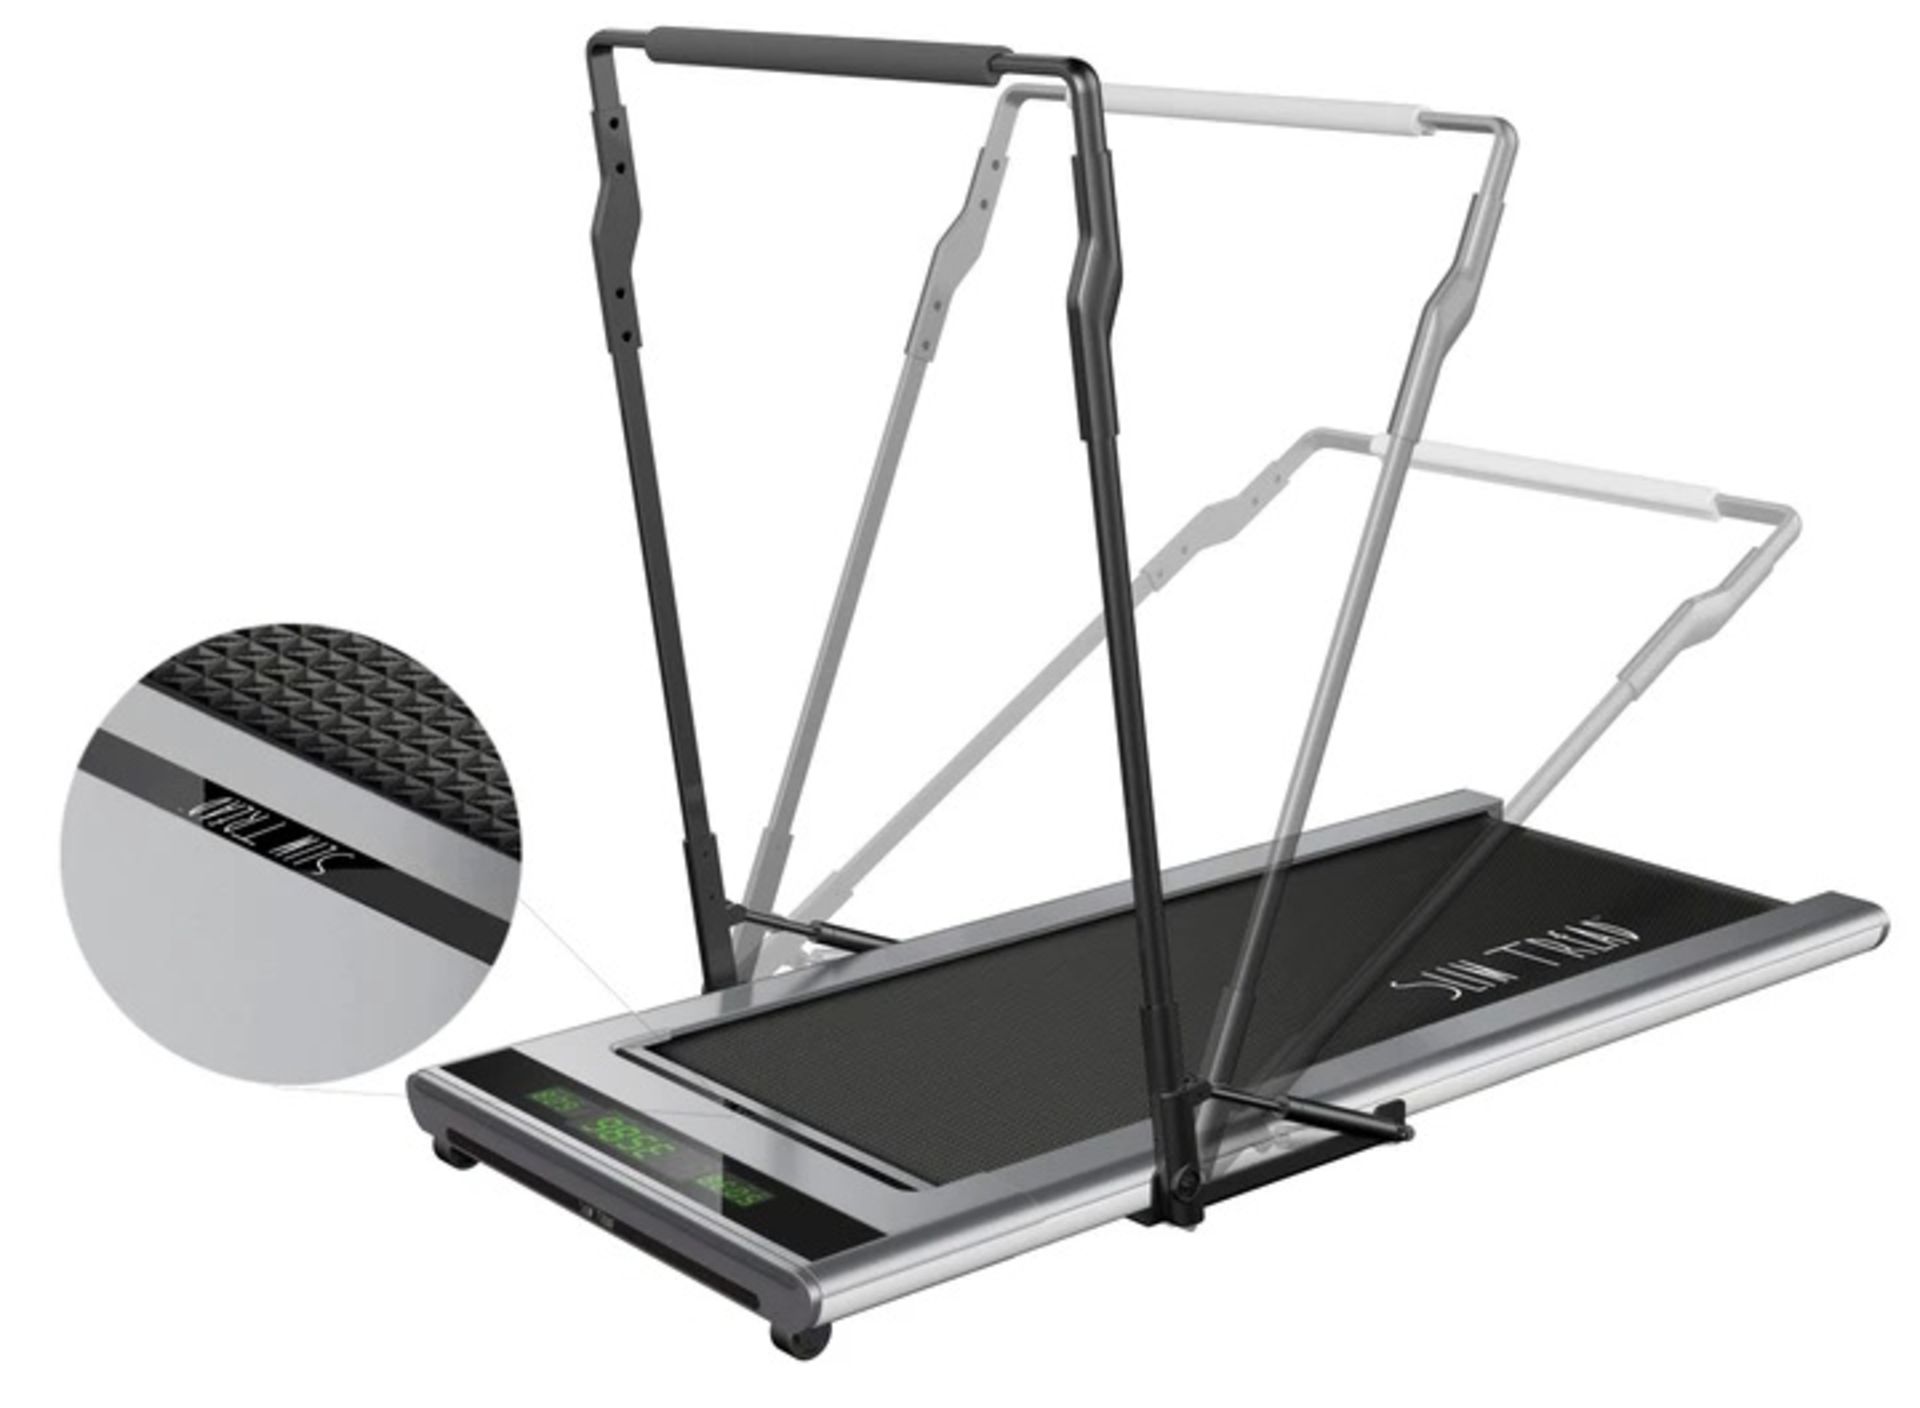 10 x Slim Tread Ultra Thin Smart Treadmill Running Machine - Brand New Sealed Stock - RRP £799 Each! - Image 19 of 24